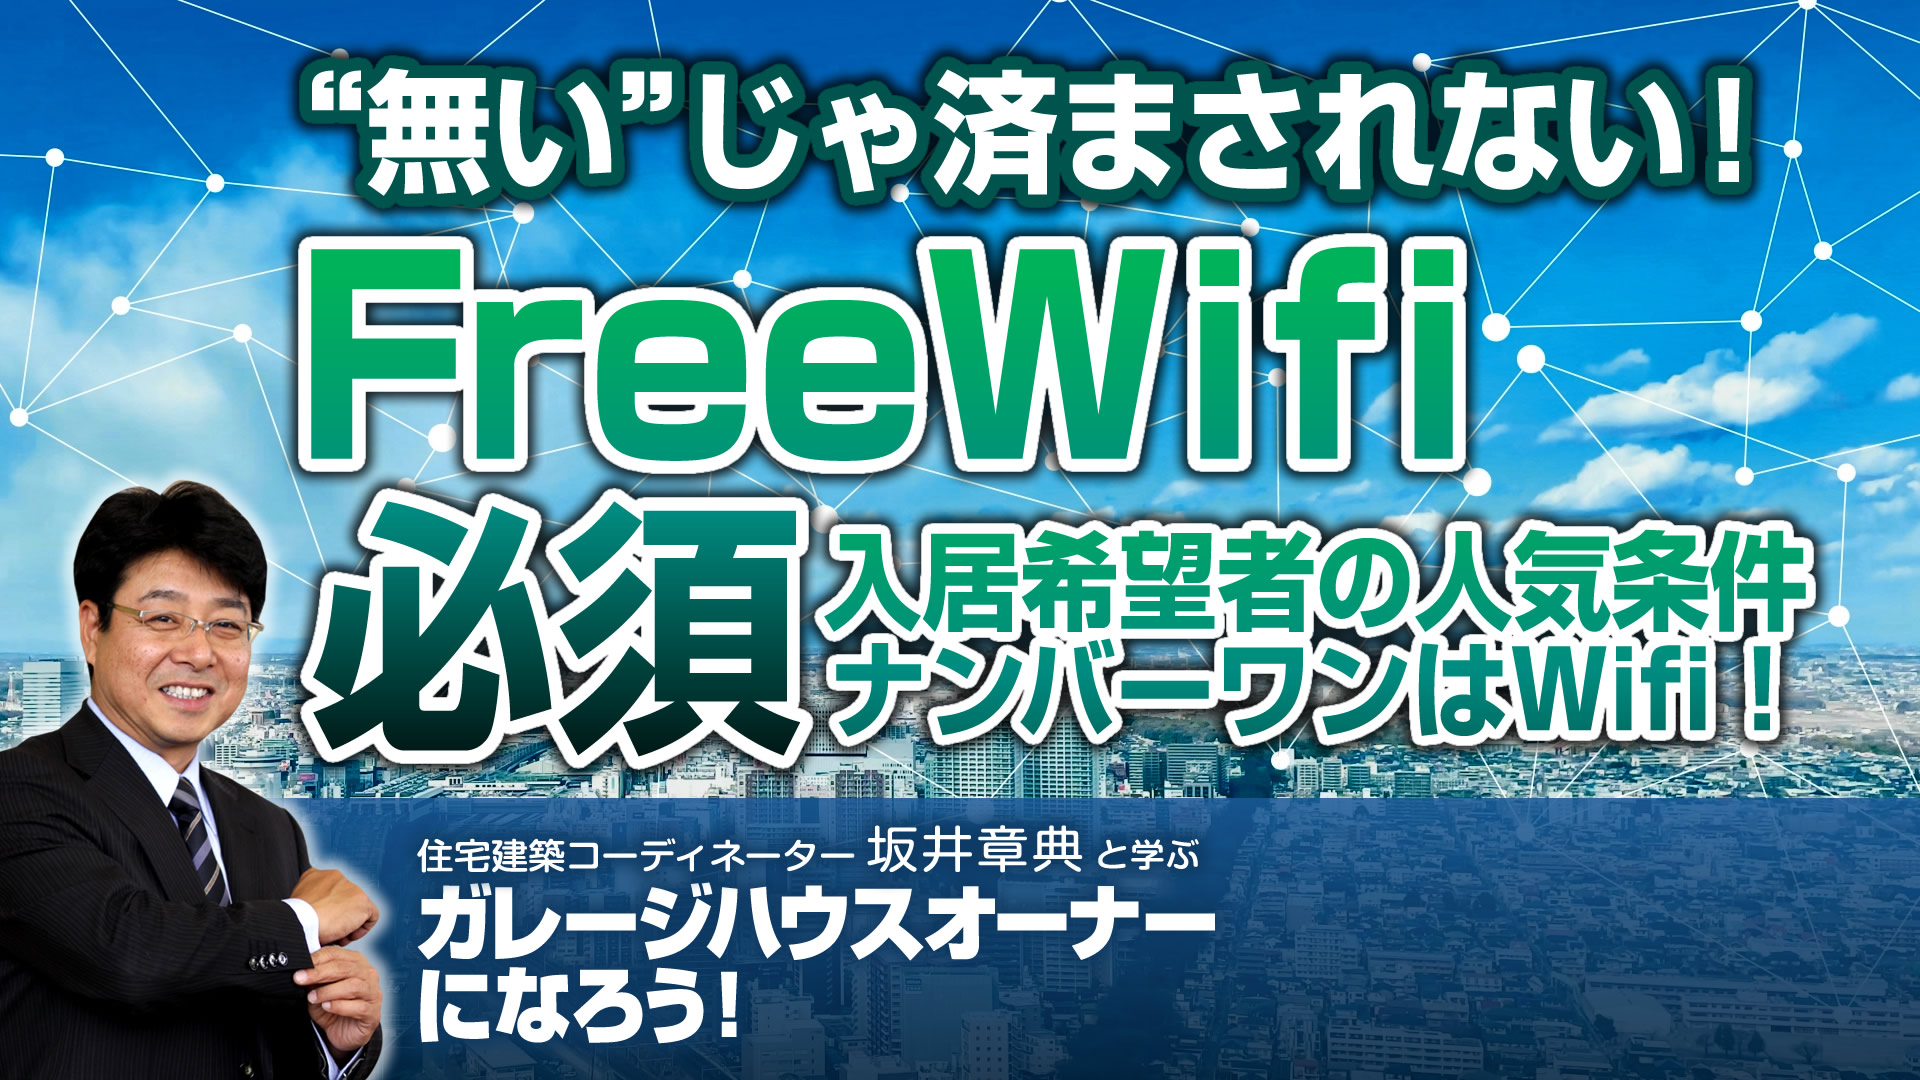 Free-WiFiの環境整備は必須不可欠